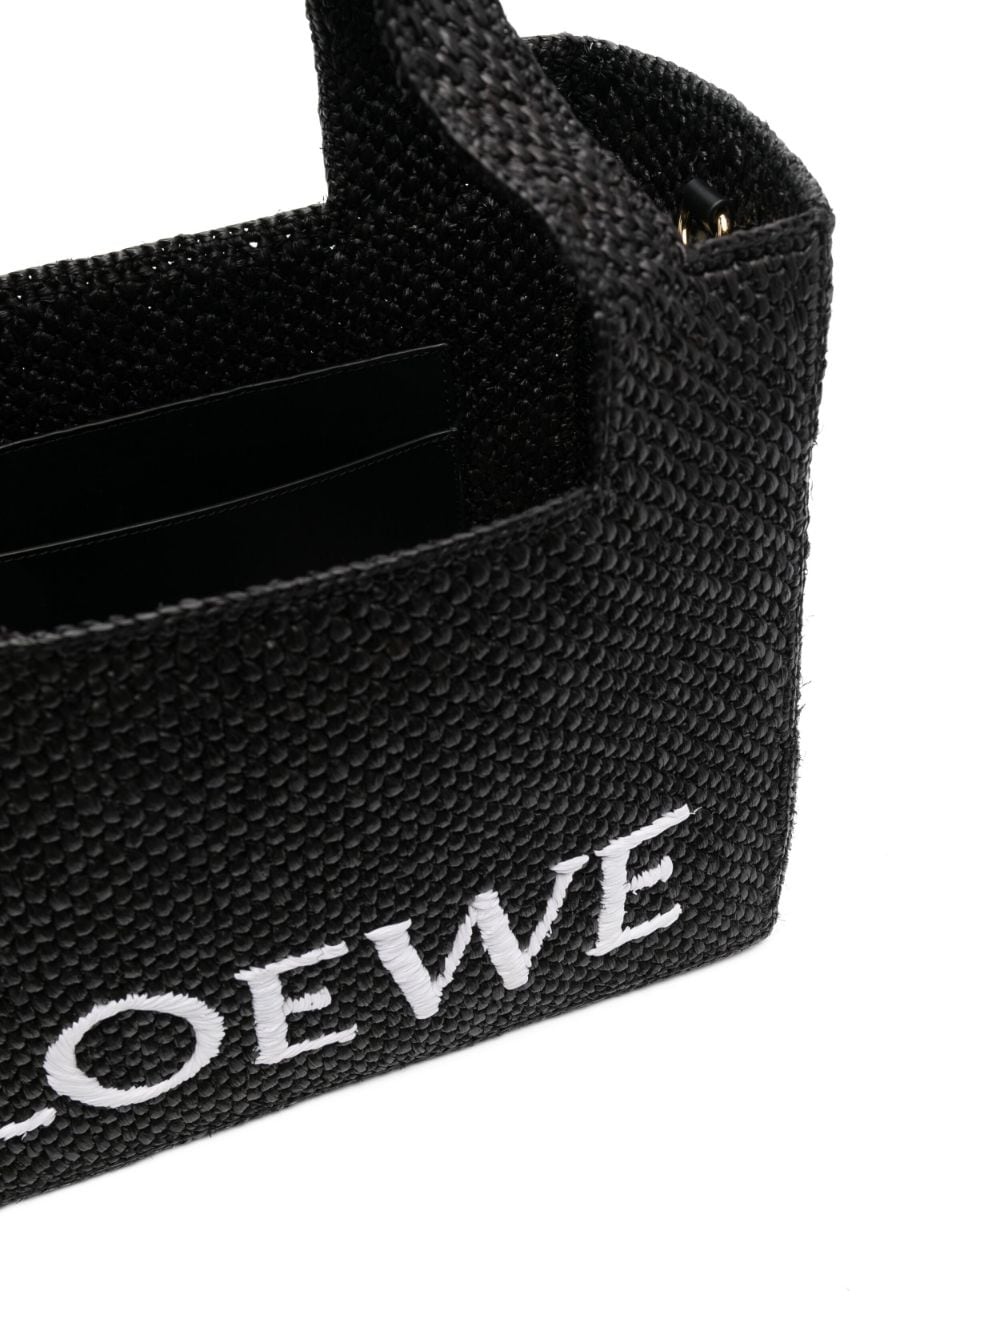 LOEWE Small Loewe Font Raffia Tote Bag